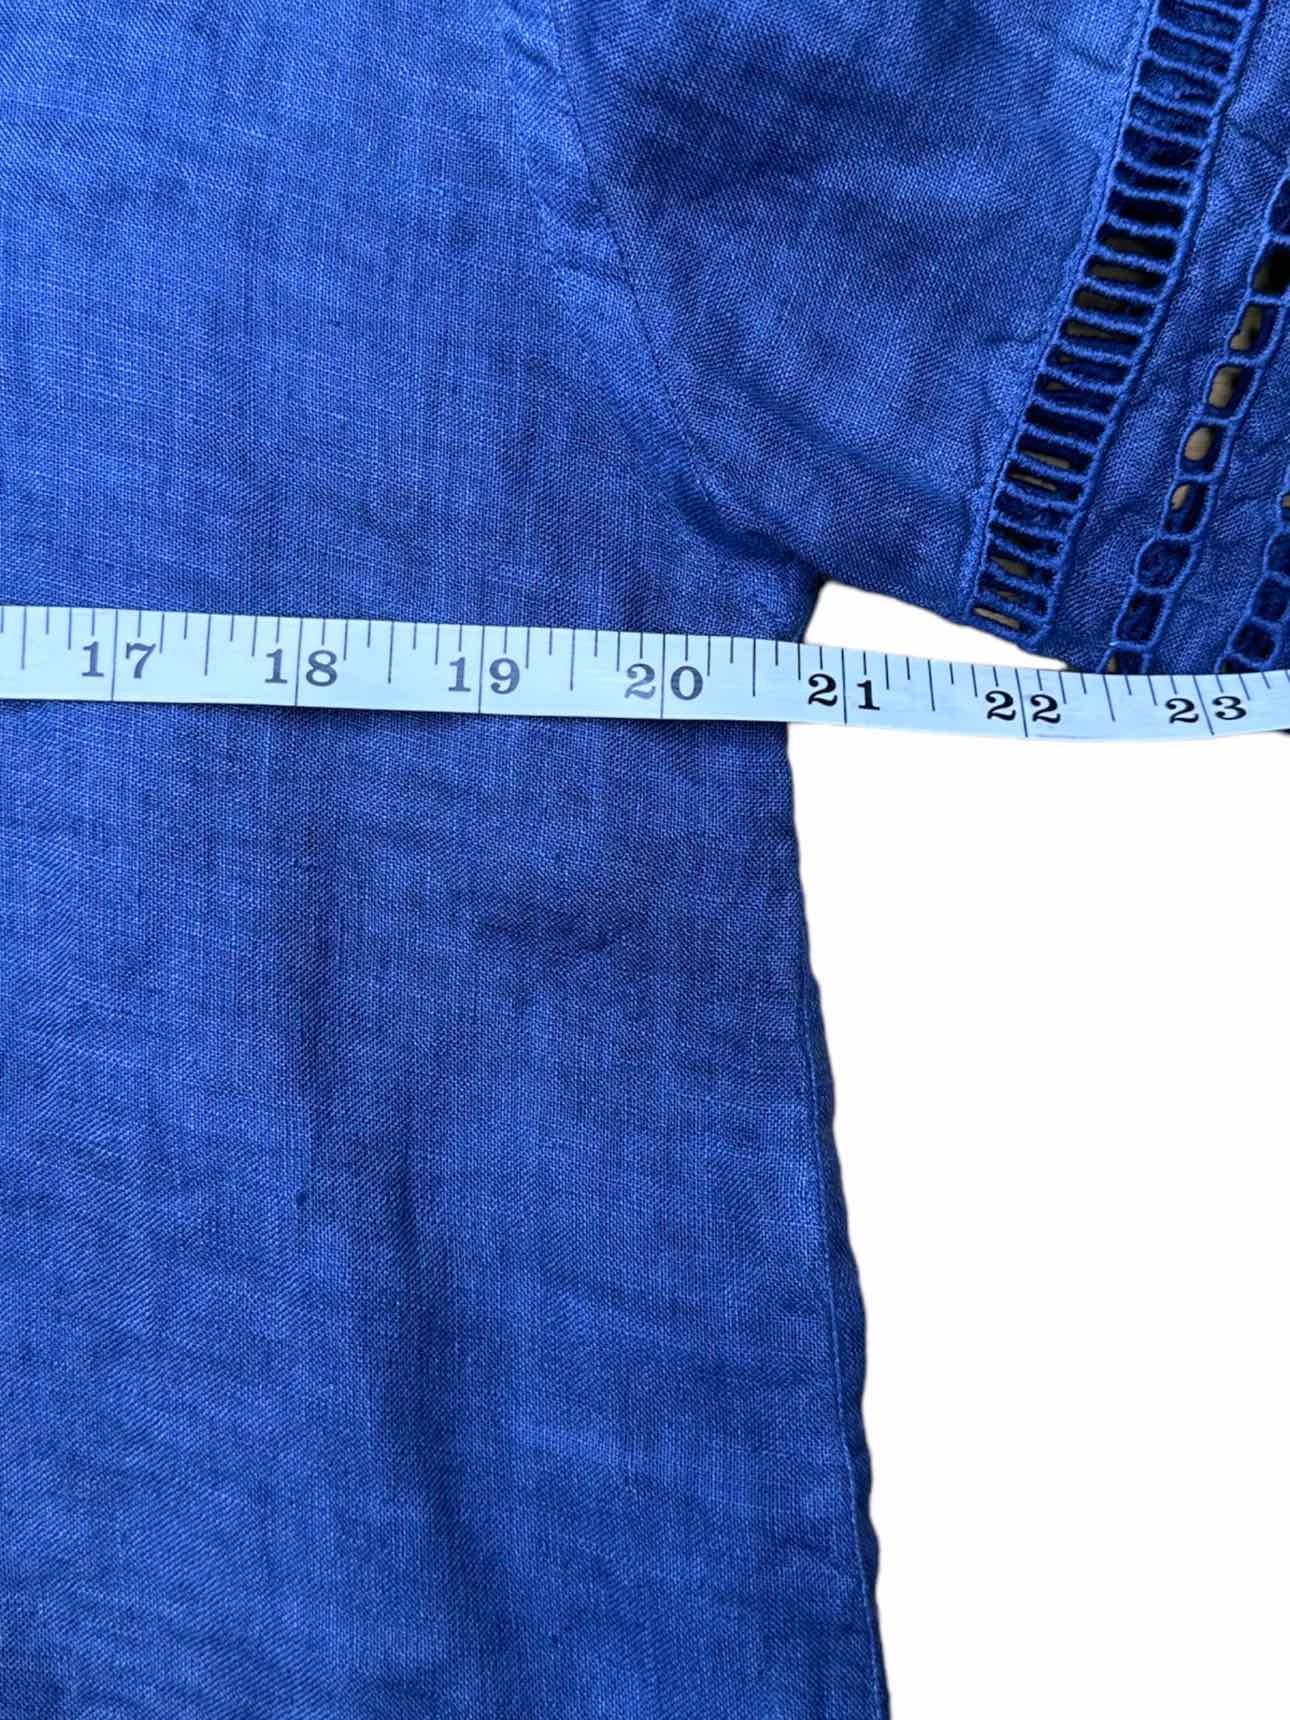 120% Lino Linen Button-Down Shirt Size 40